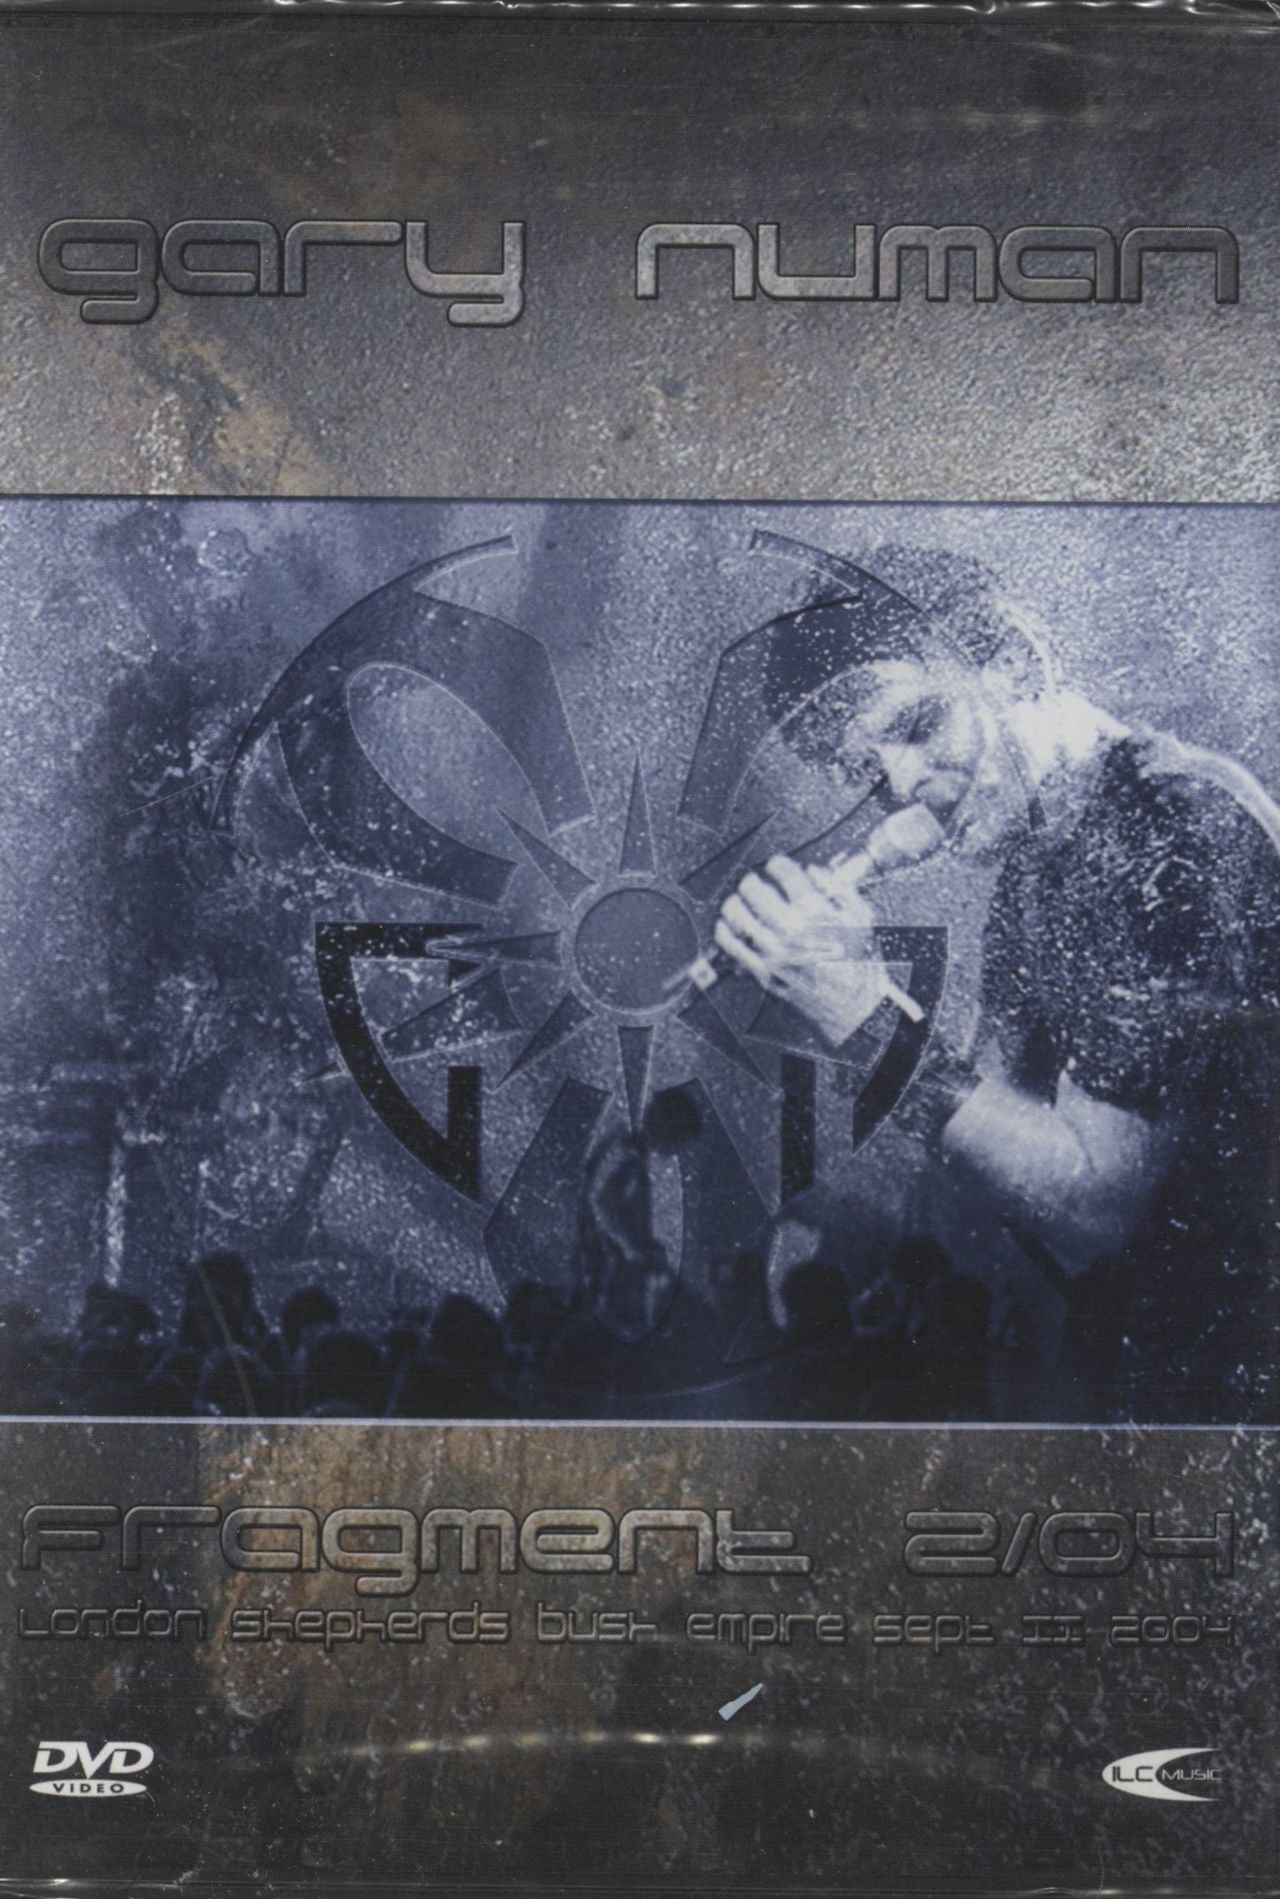 Gary Numan Fragment 2/04 - Sealed UK DVD — RareVinyl.com